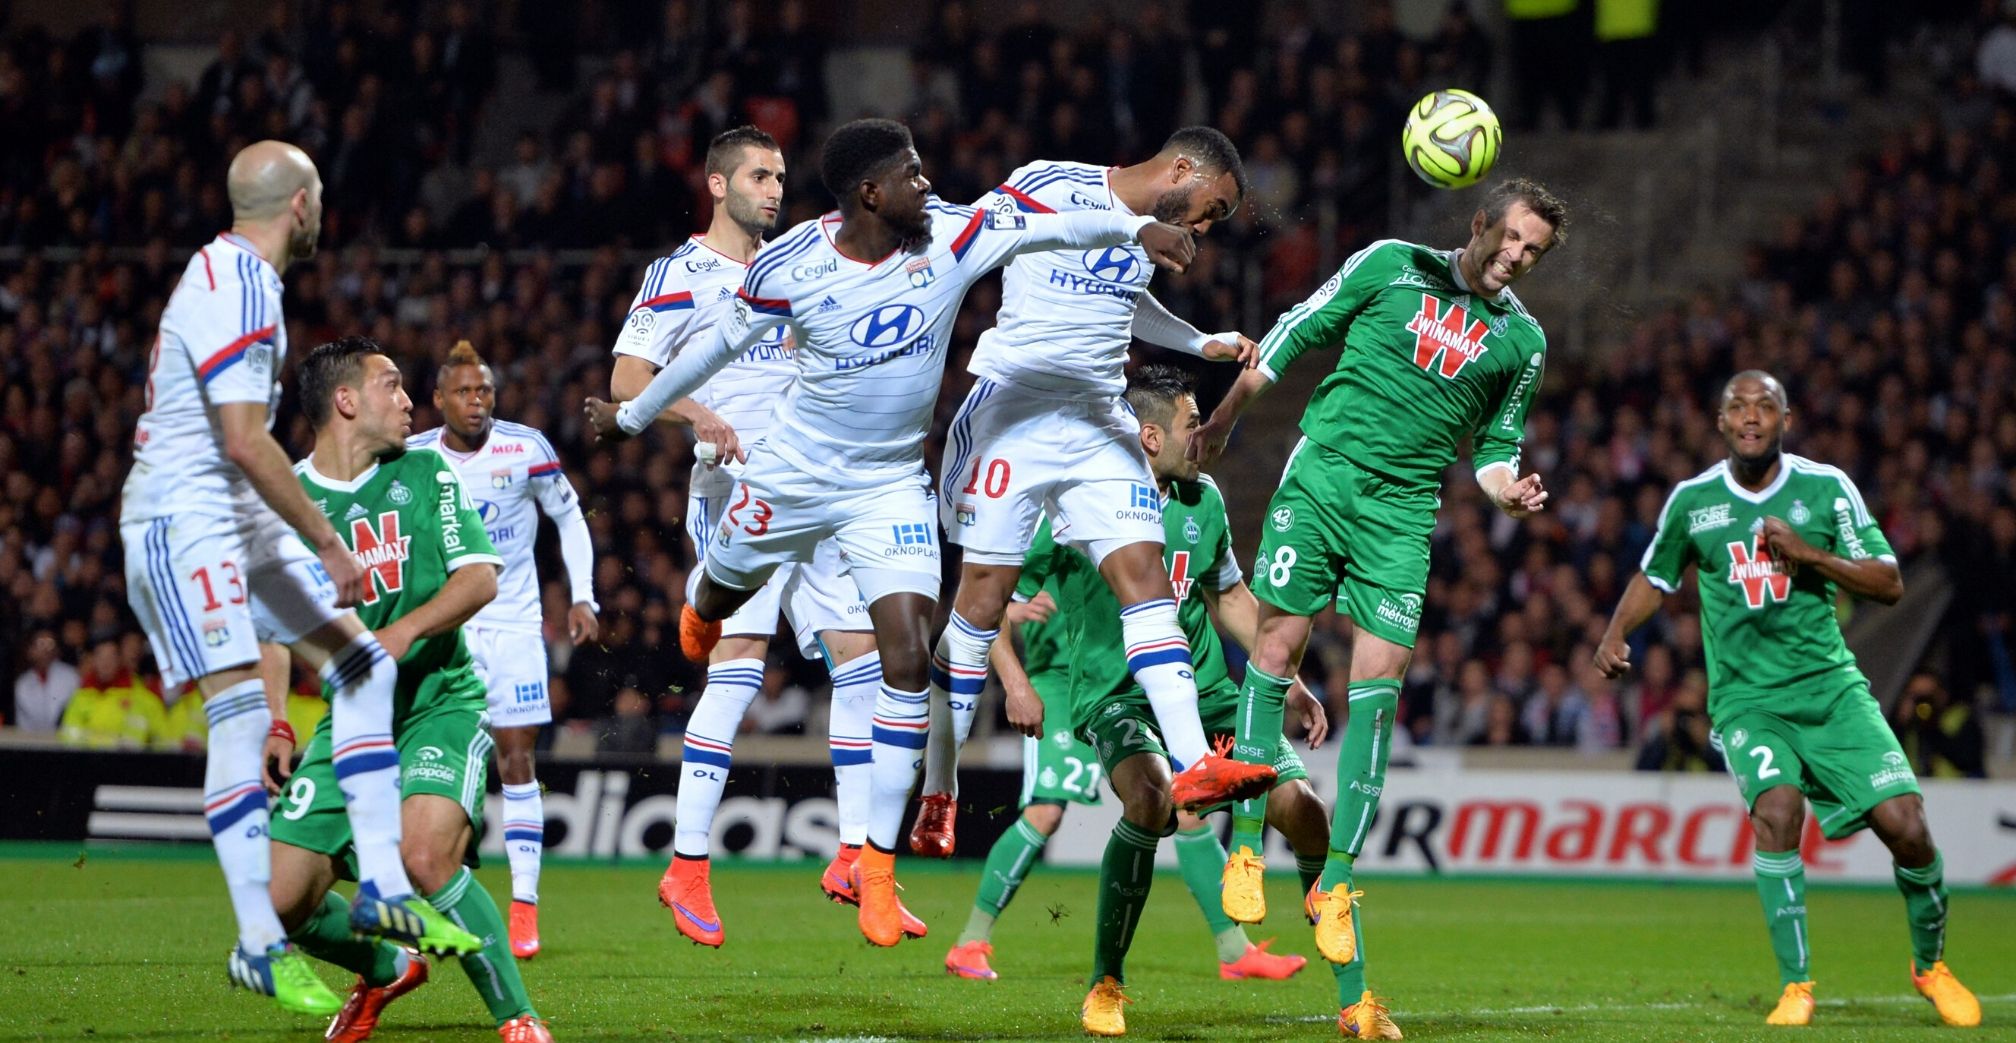 Lyon Saint-Etienne derby 2014/15